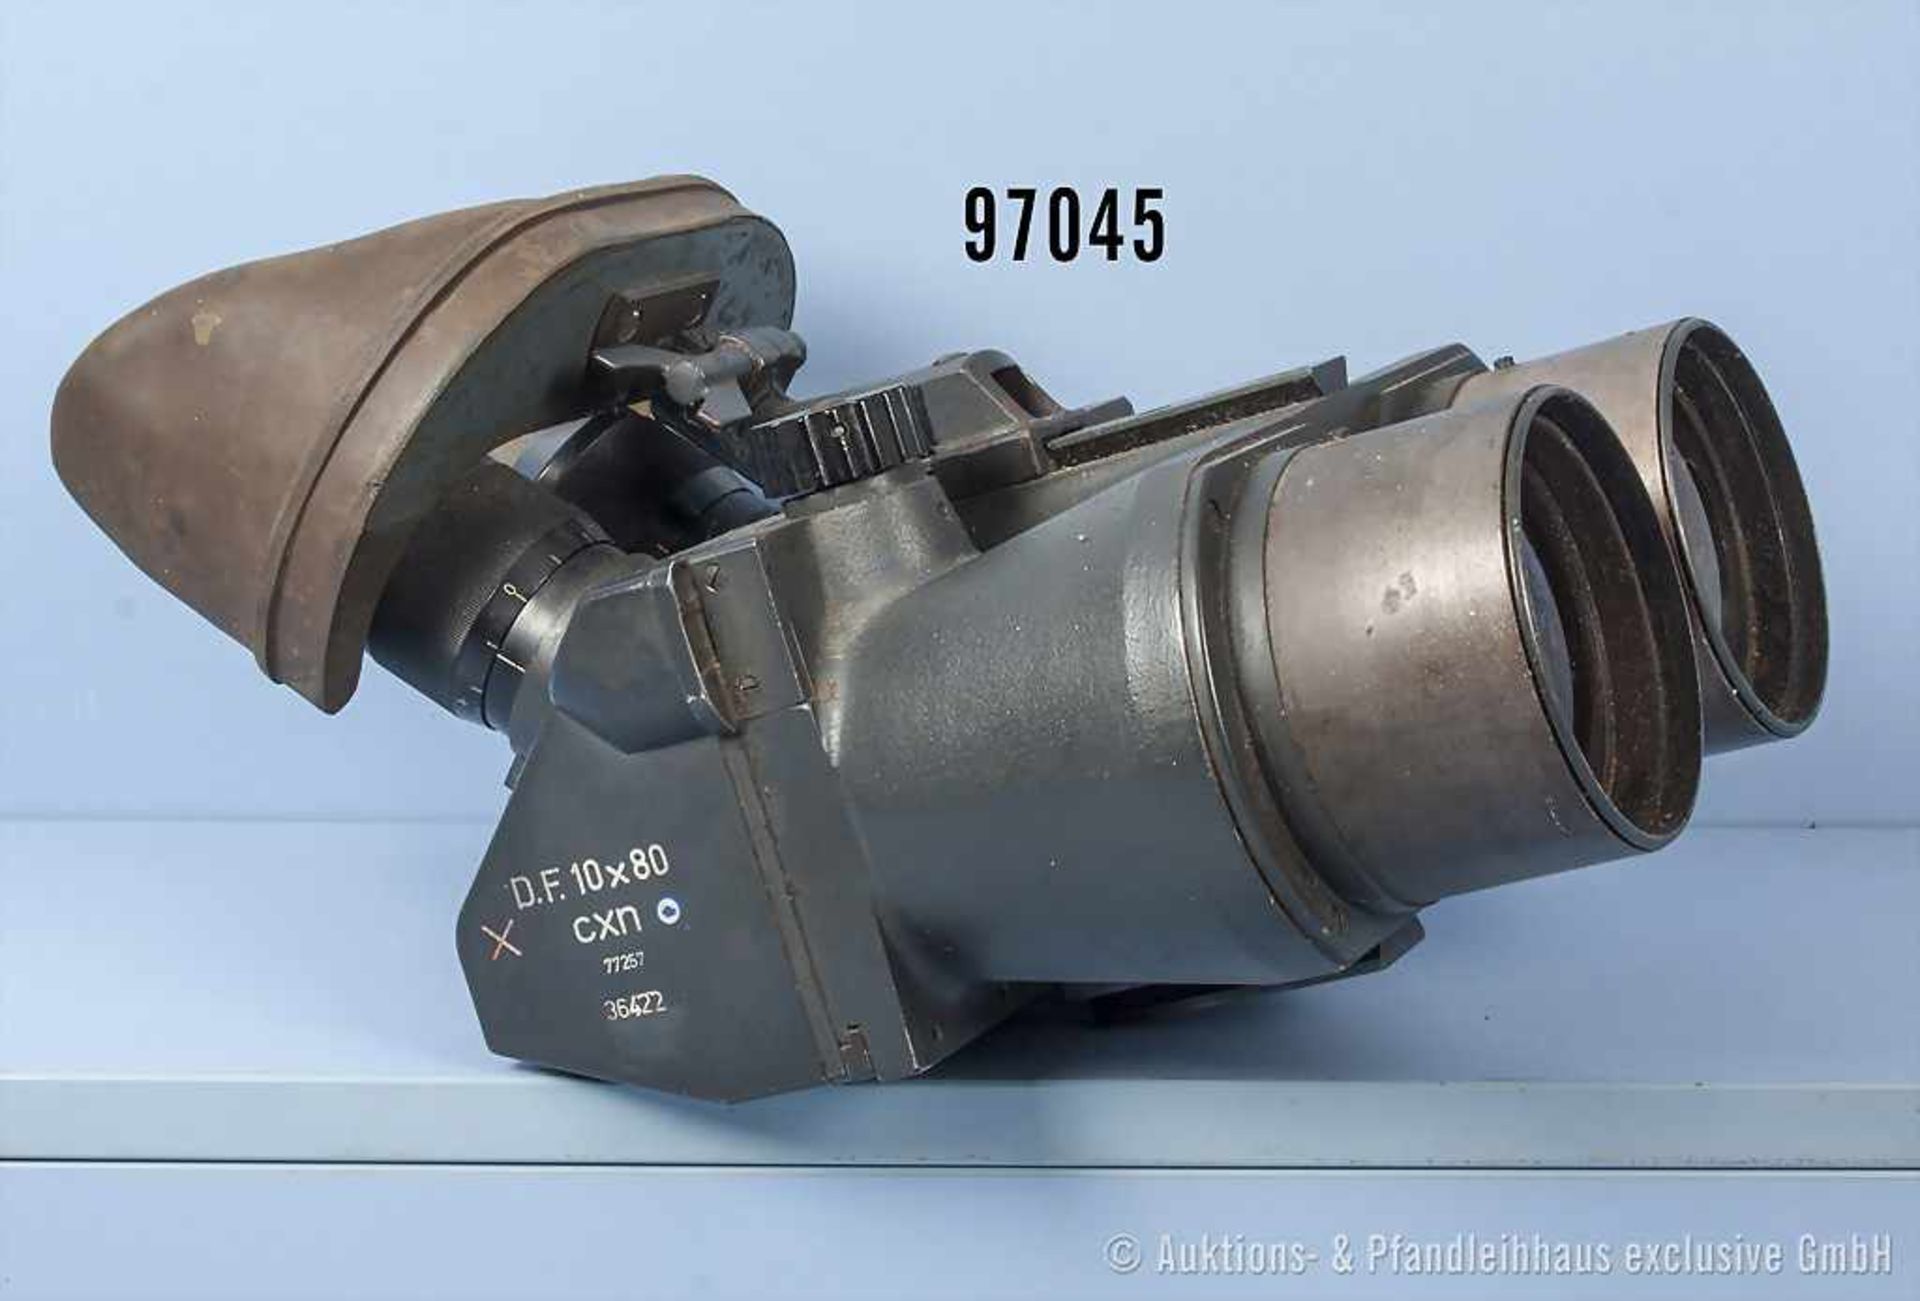 Flak Optik 2. WK, feldgrau lackiert, mit Herstellerbezeichnung "D.F. 10x80 cxn 77257 - 36422", mit